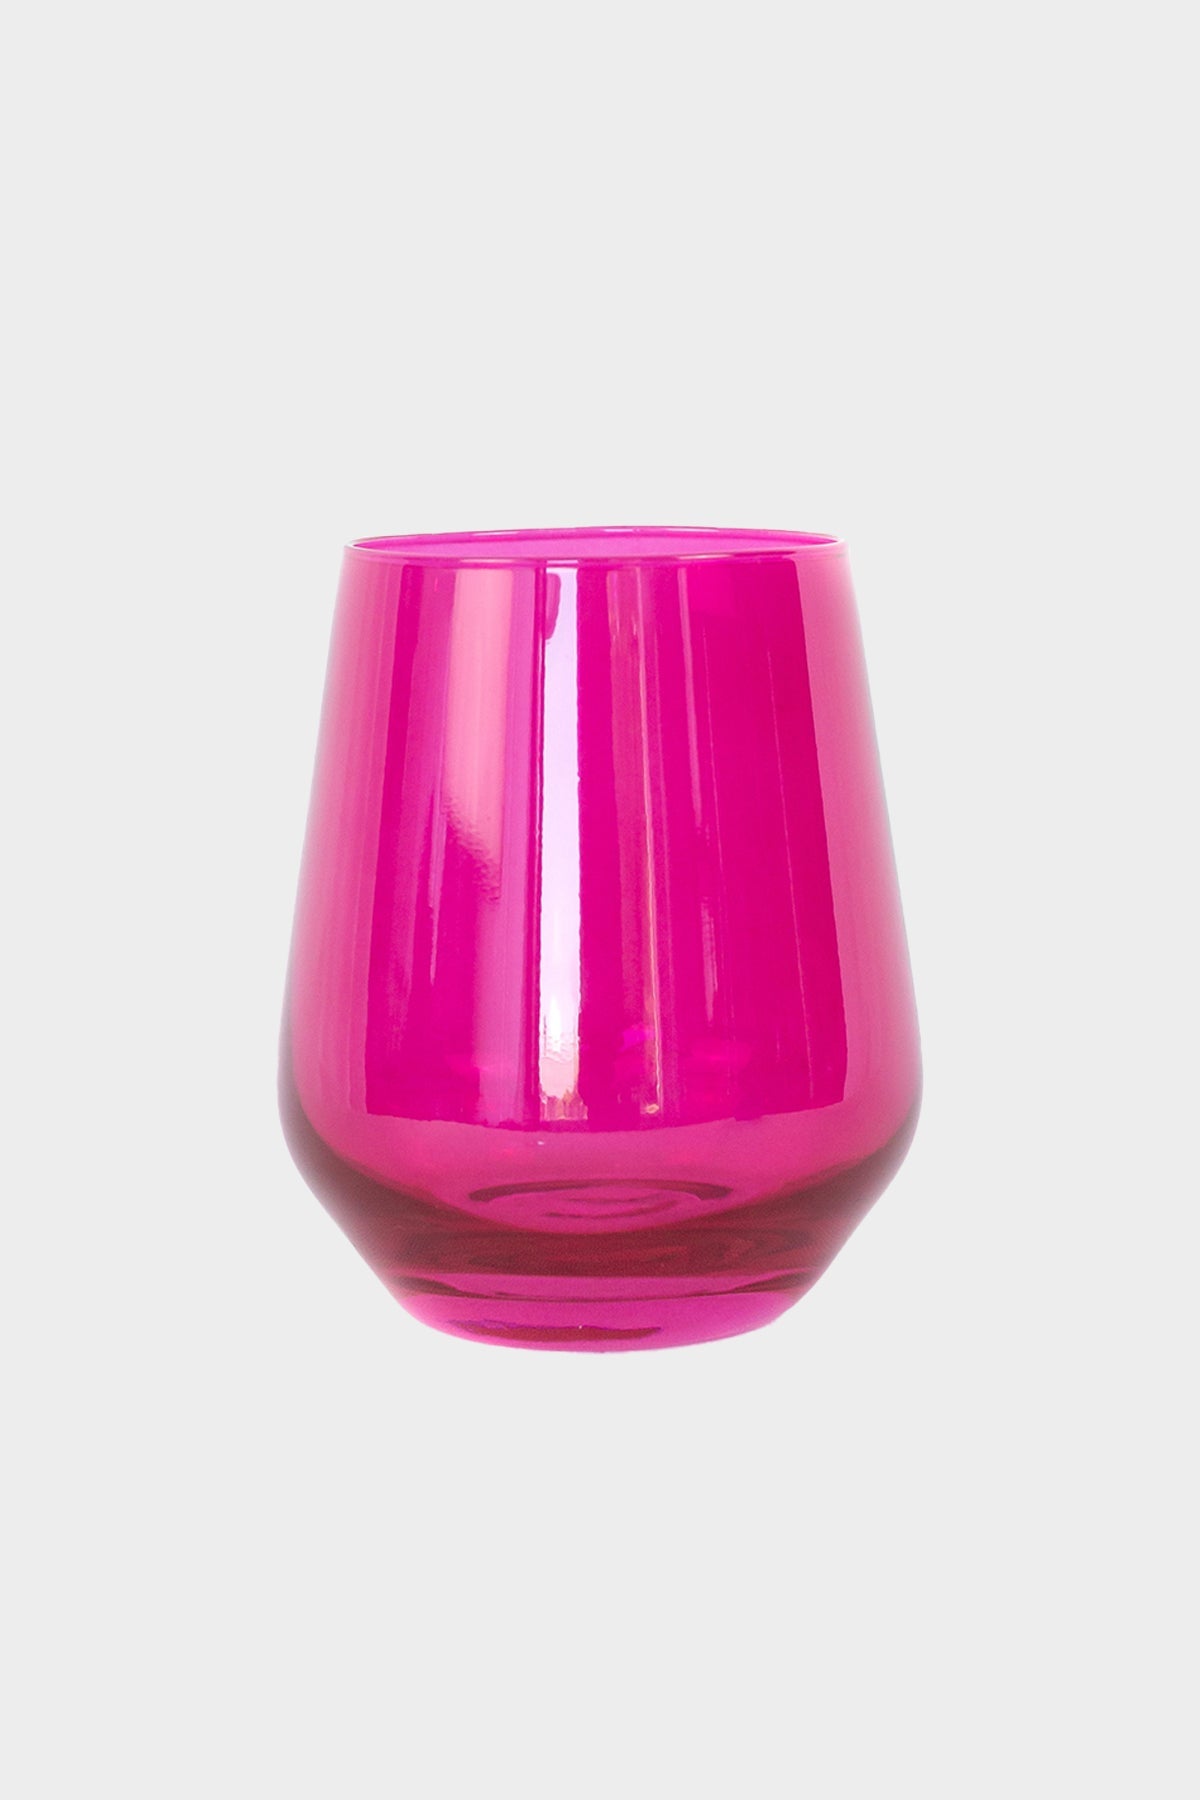 Wine Stemless Glass in Fuchsia - Set of 6 - shop-olivia.com